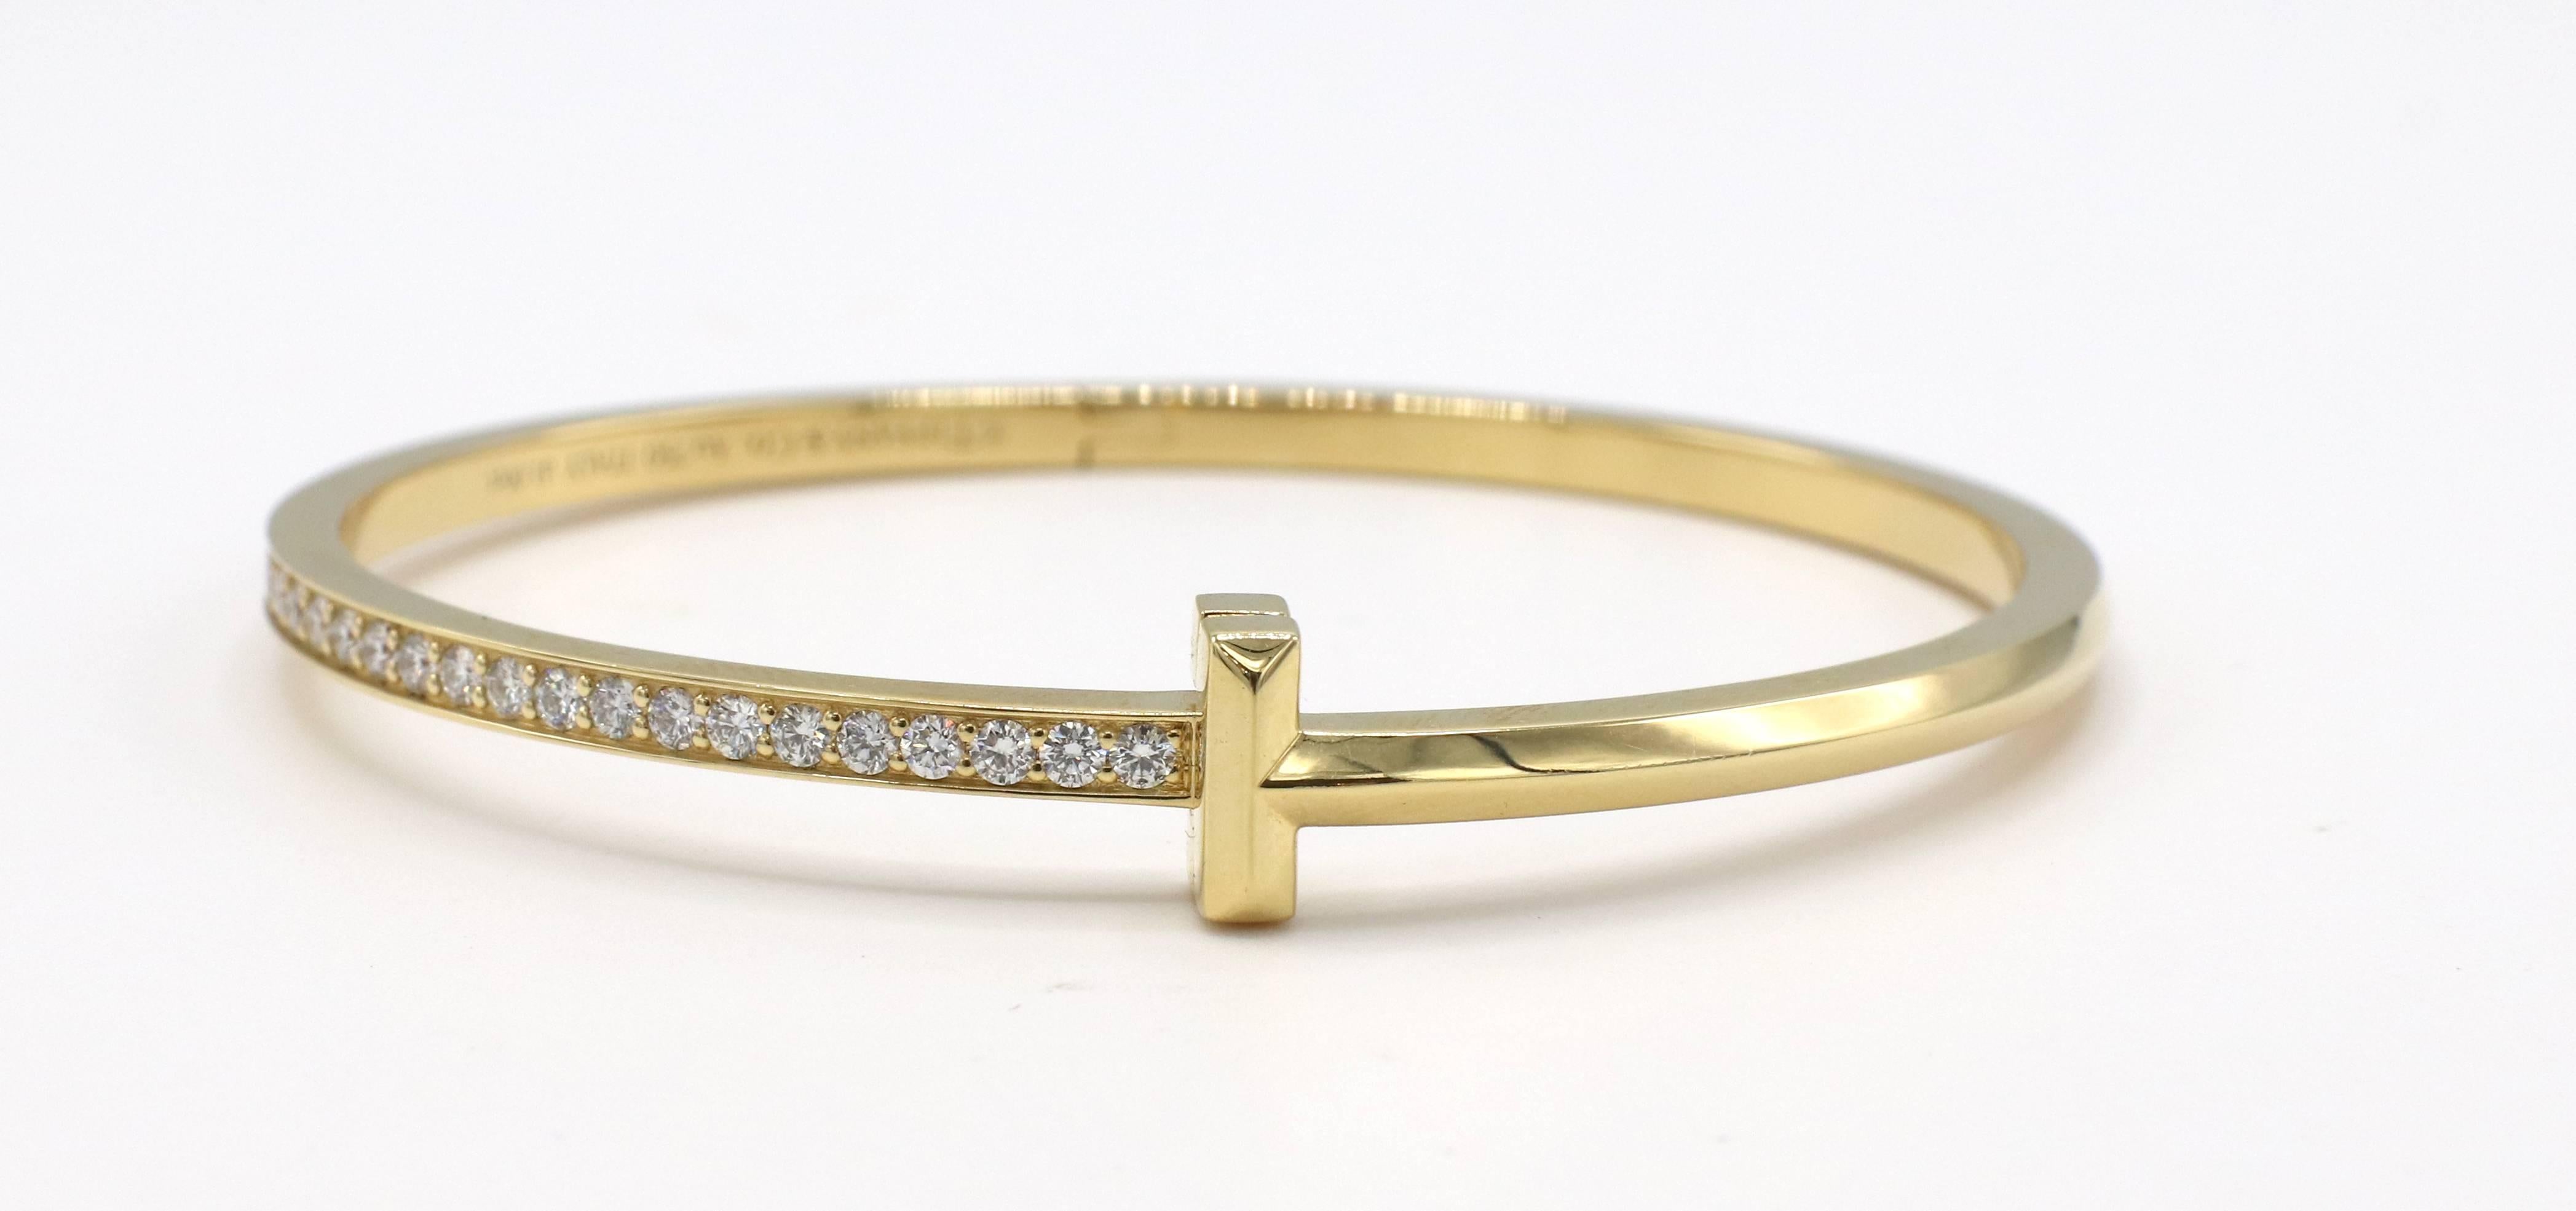 Tiffany & Co. T1 Narrow Diamond Hinged Bangle Bracelet Yellow Gold
Metal: 18k yellow gold
Weight: 21.85 grams
Diamonds: 1 CTW G VS (d 1.00ct hallmark)
Width: 3mm
Signed: 